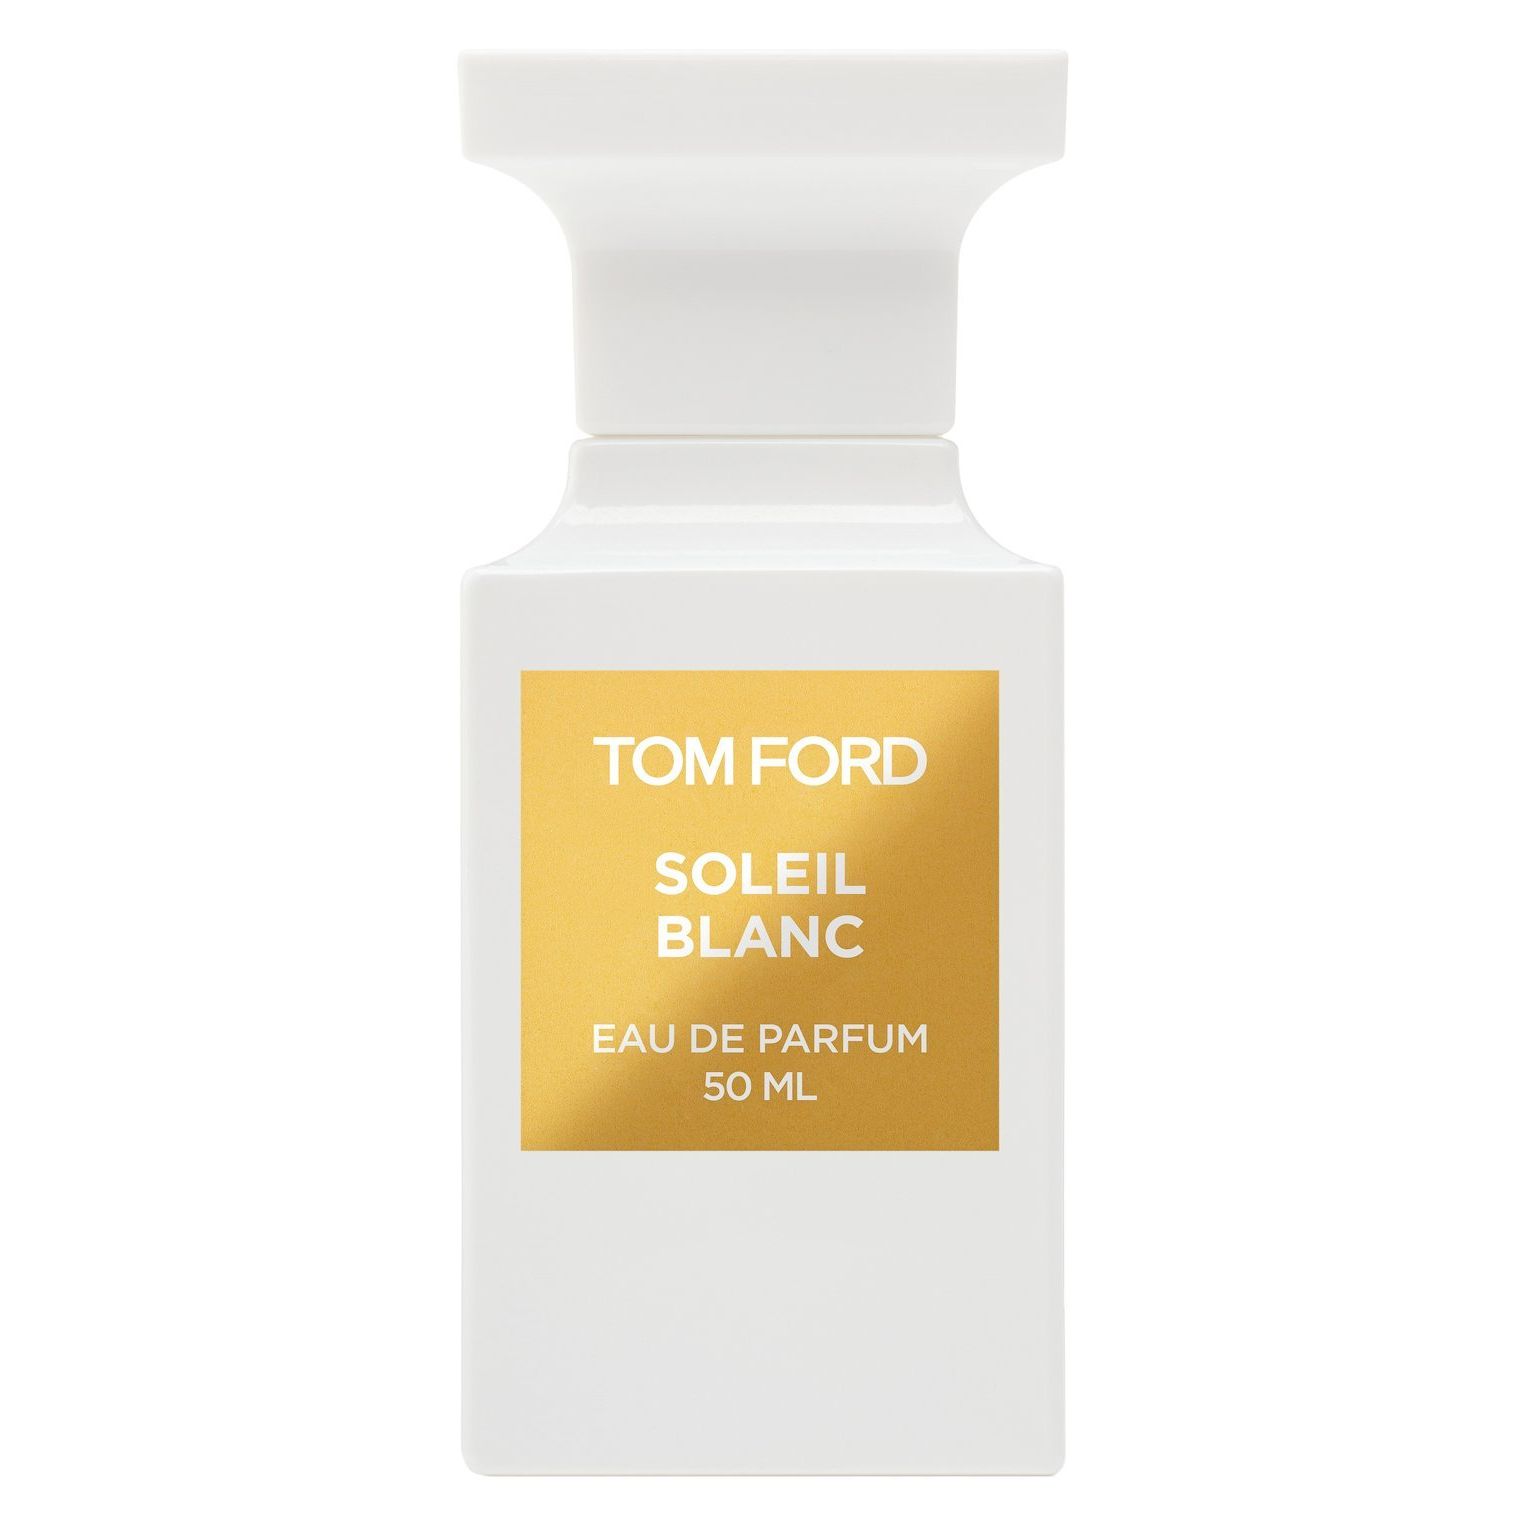 Вода парфюмерная Tom Ford Soleil Blanc, унисекс, 50 мл tom ford eau de soleil blanc 50